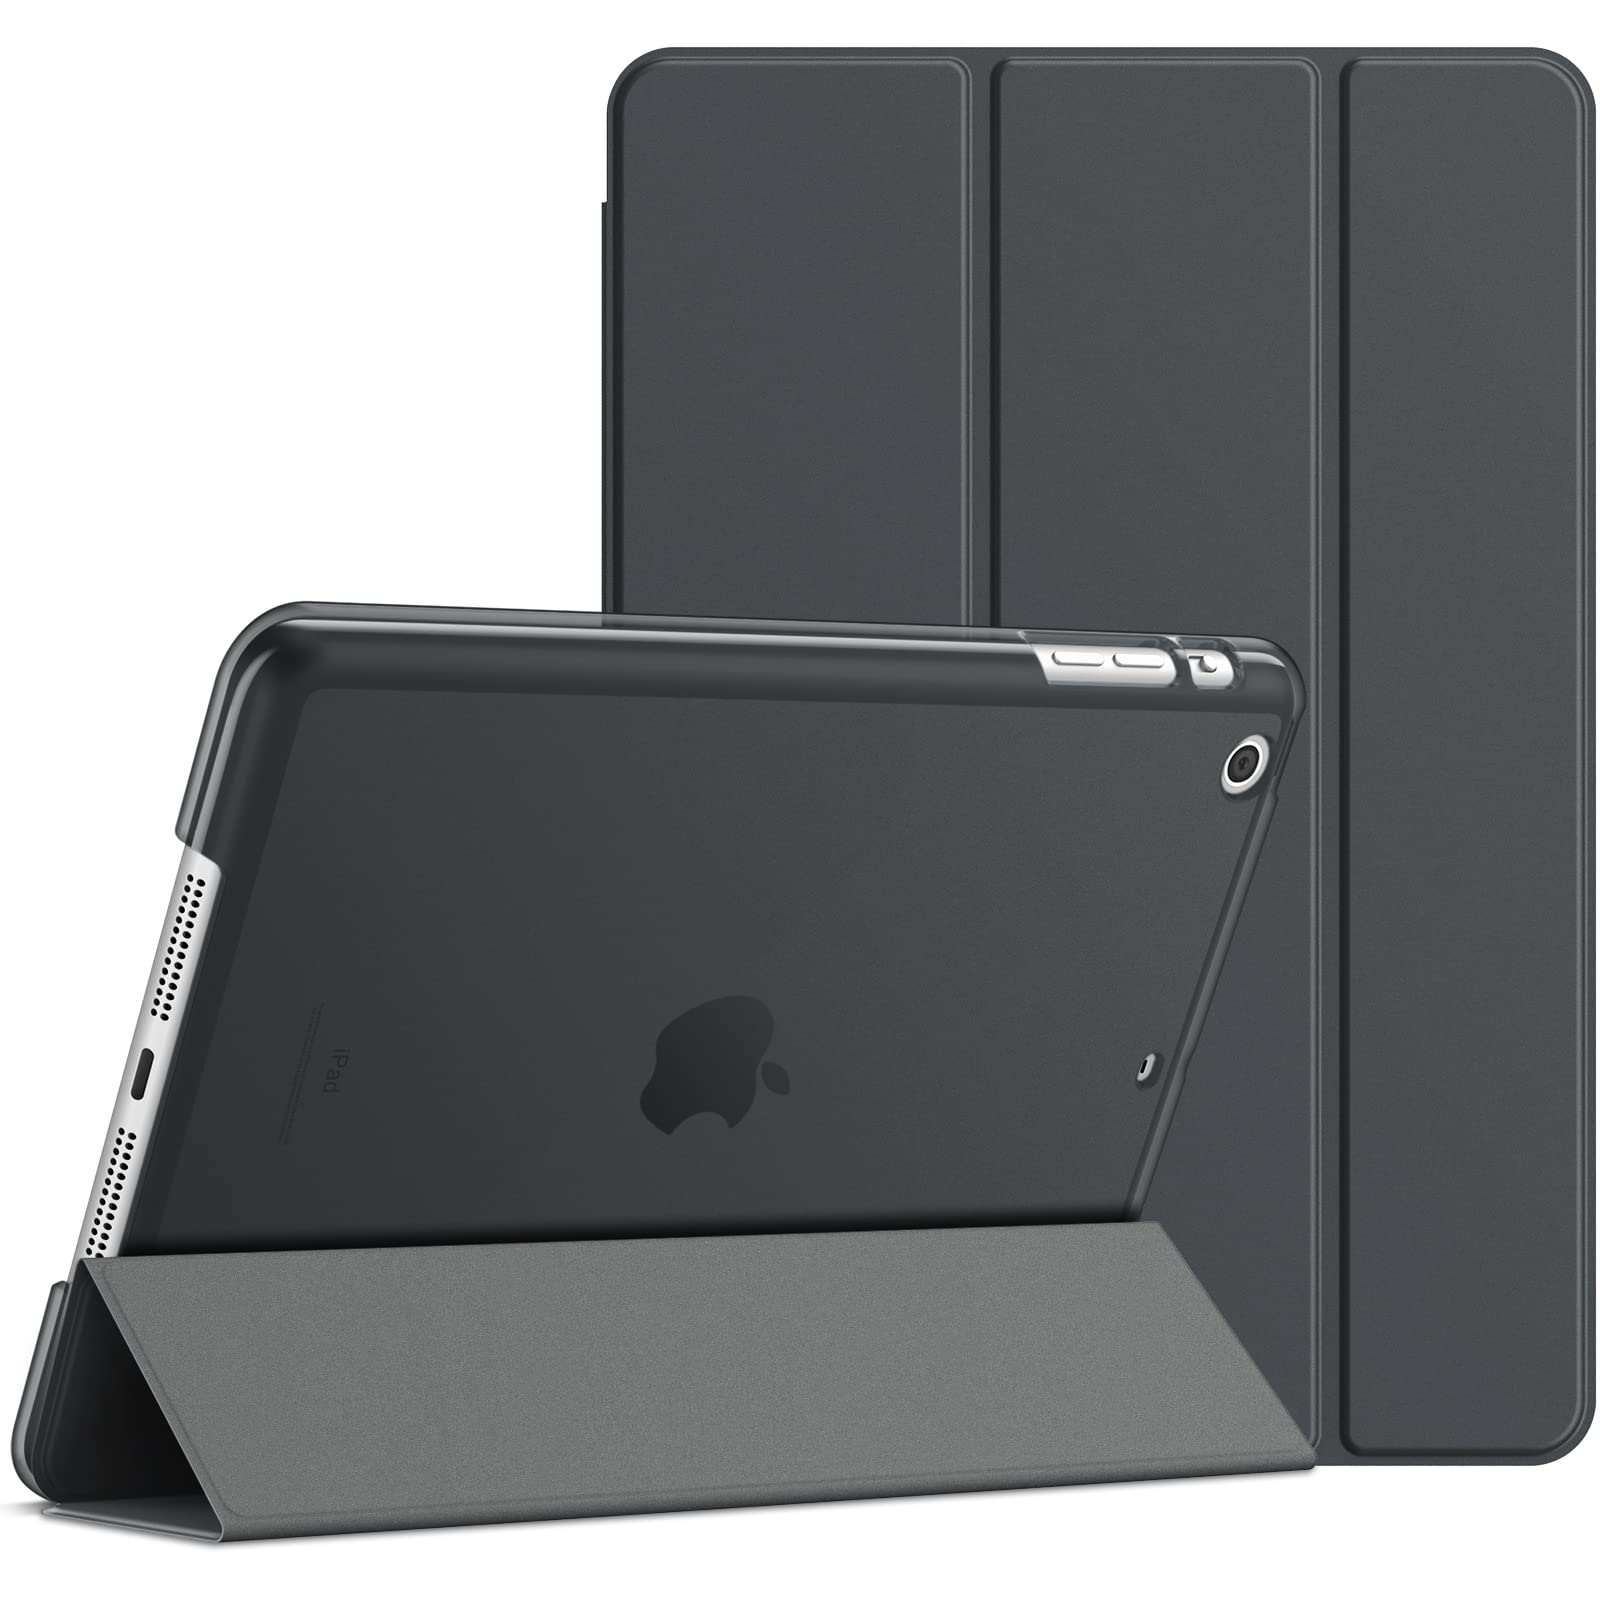 Book Cover JETech Case for iPad Mini 1 2 3 (NOT for iPad Mini 4), Smart Cover with Auto Sleep/Wake, Dark Grey